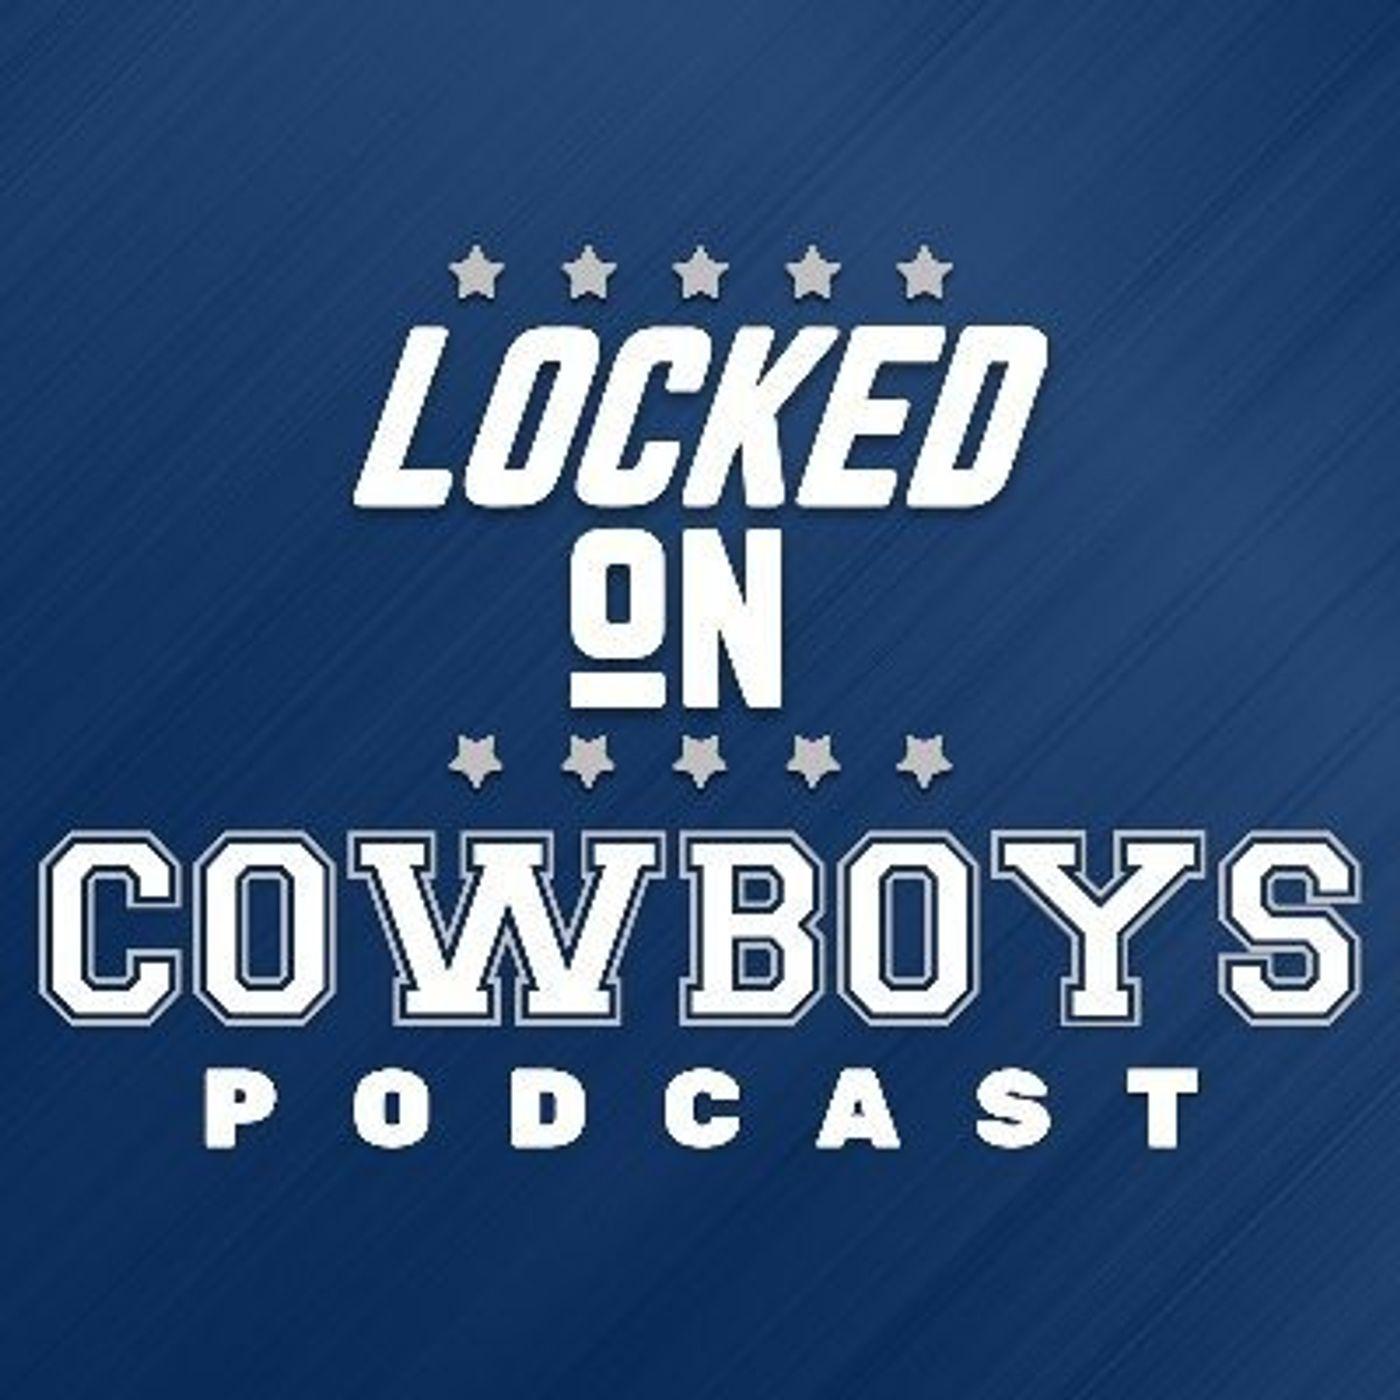 LOCKED ON COWBOYS March 21 Cowboys Sign Randall Cobb Listen Notes